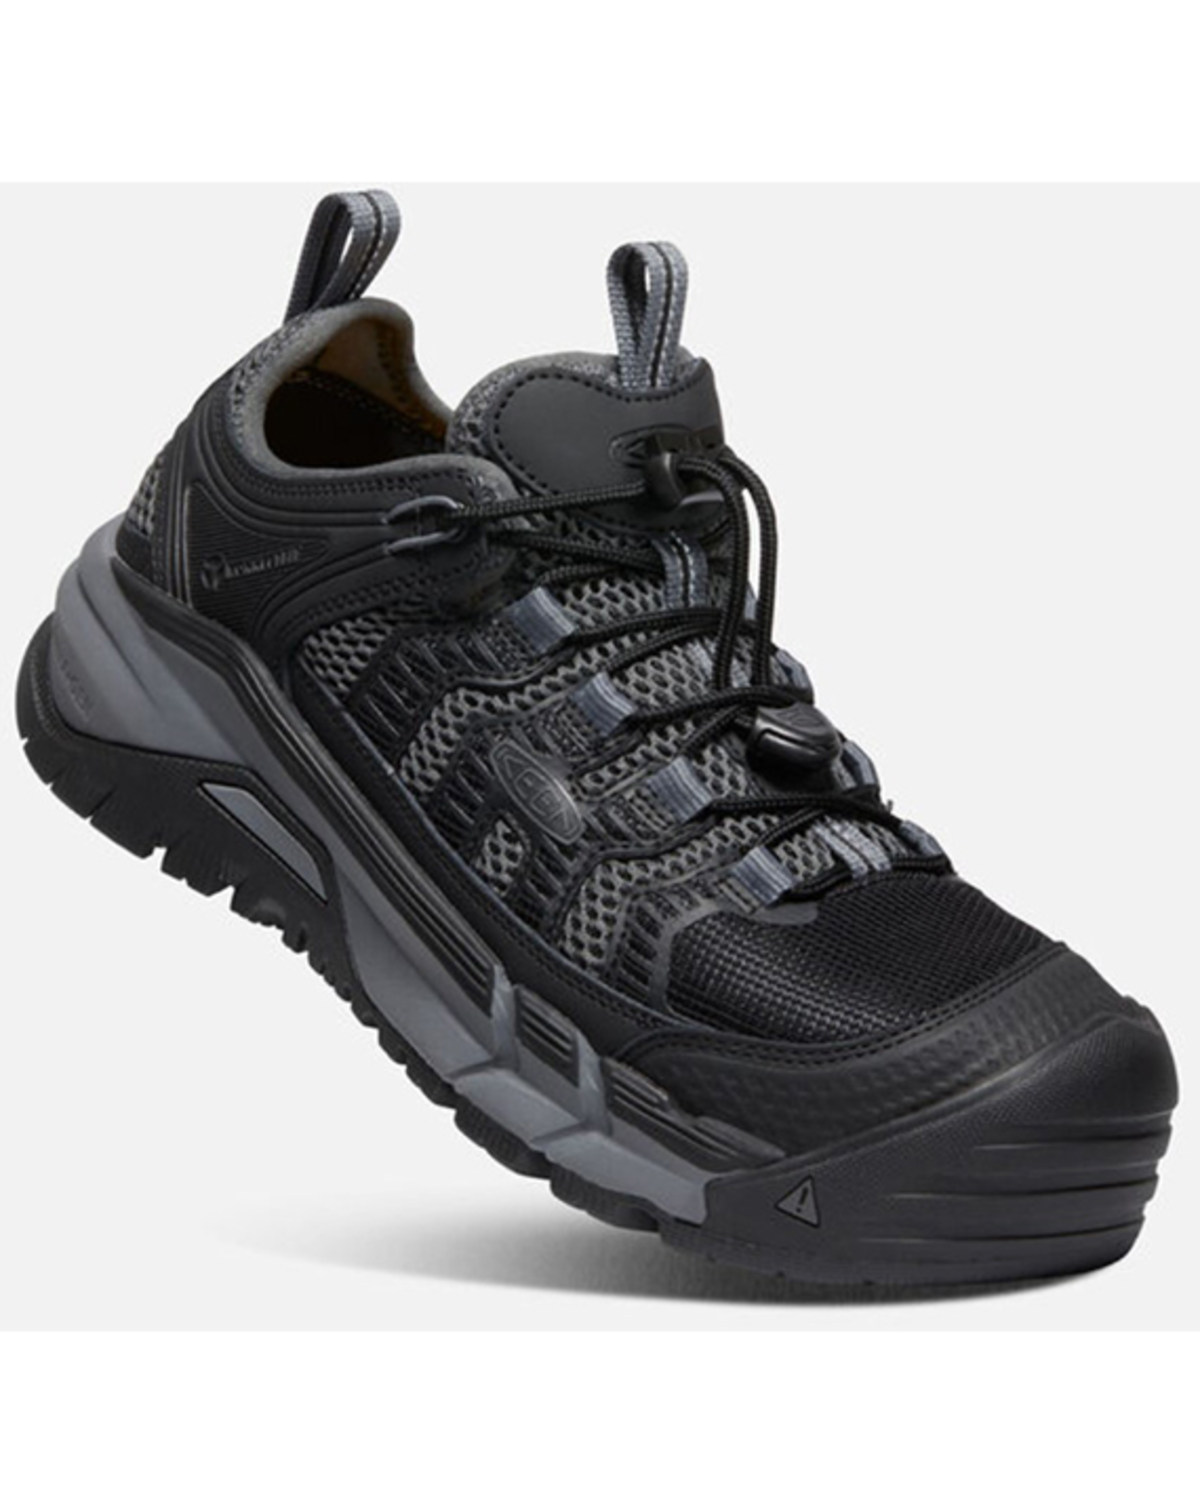 Keen Men's Birmingham Lace-Up Waterproof Work Sneakers - Carbon Toe